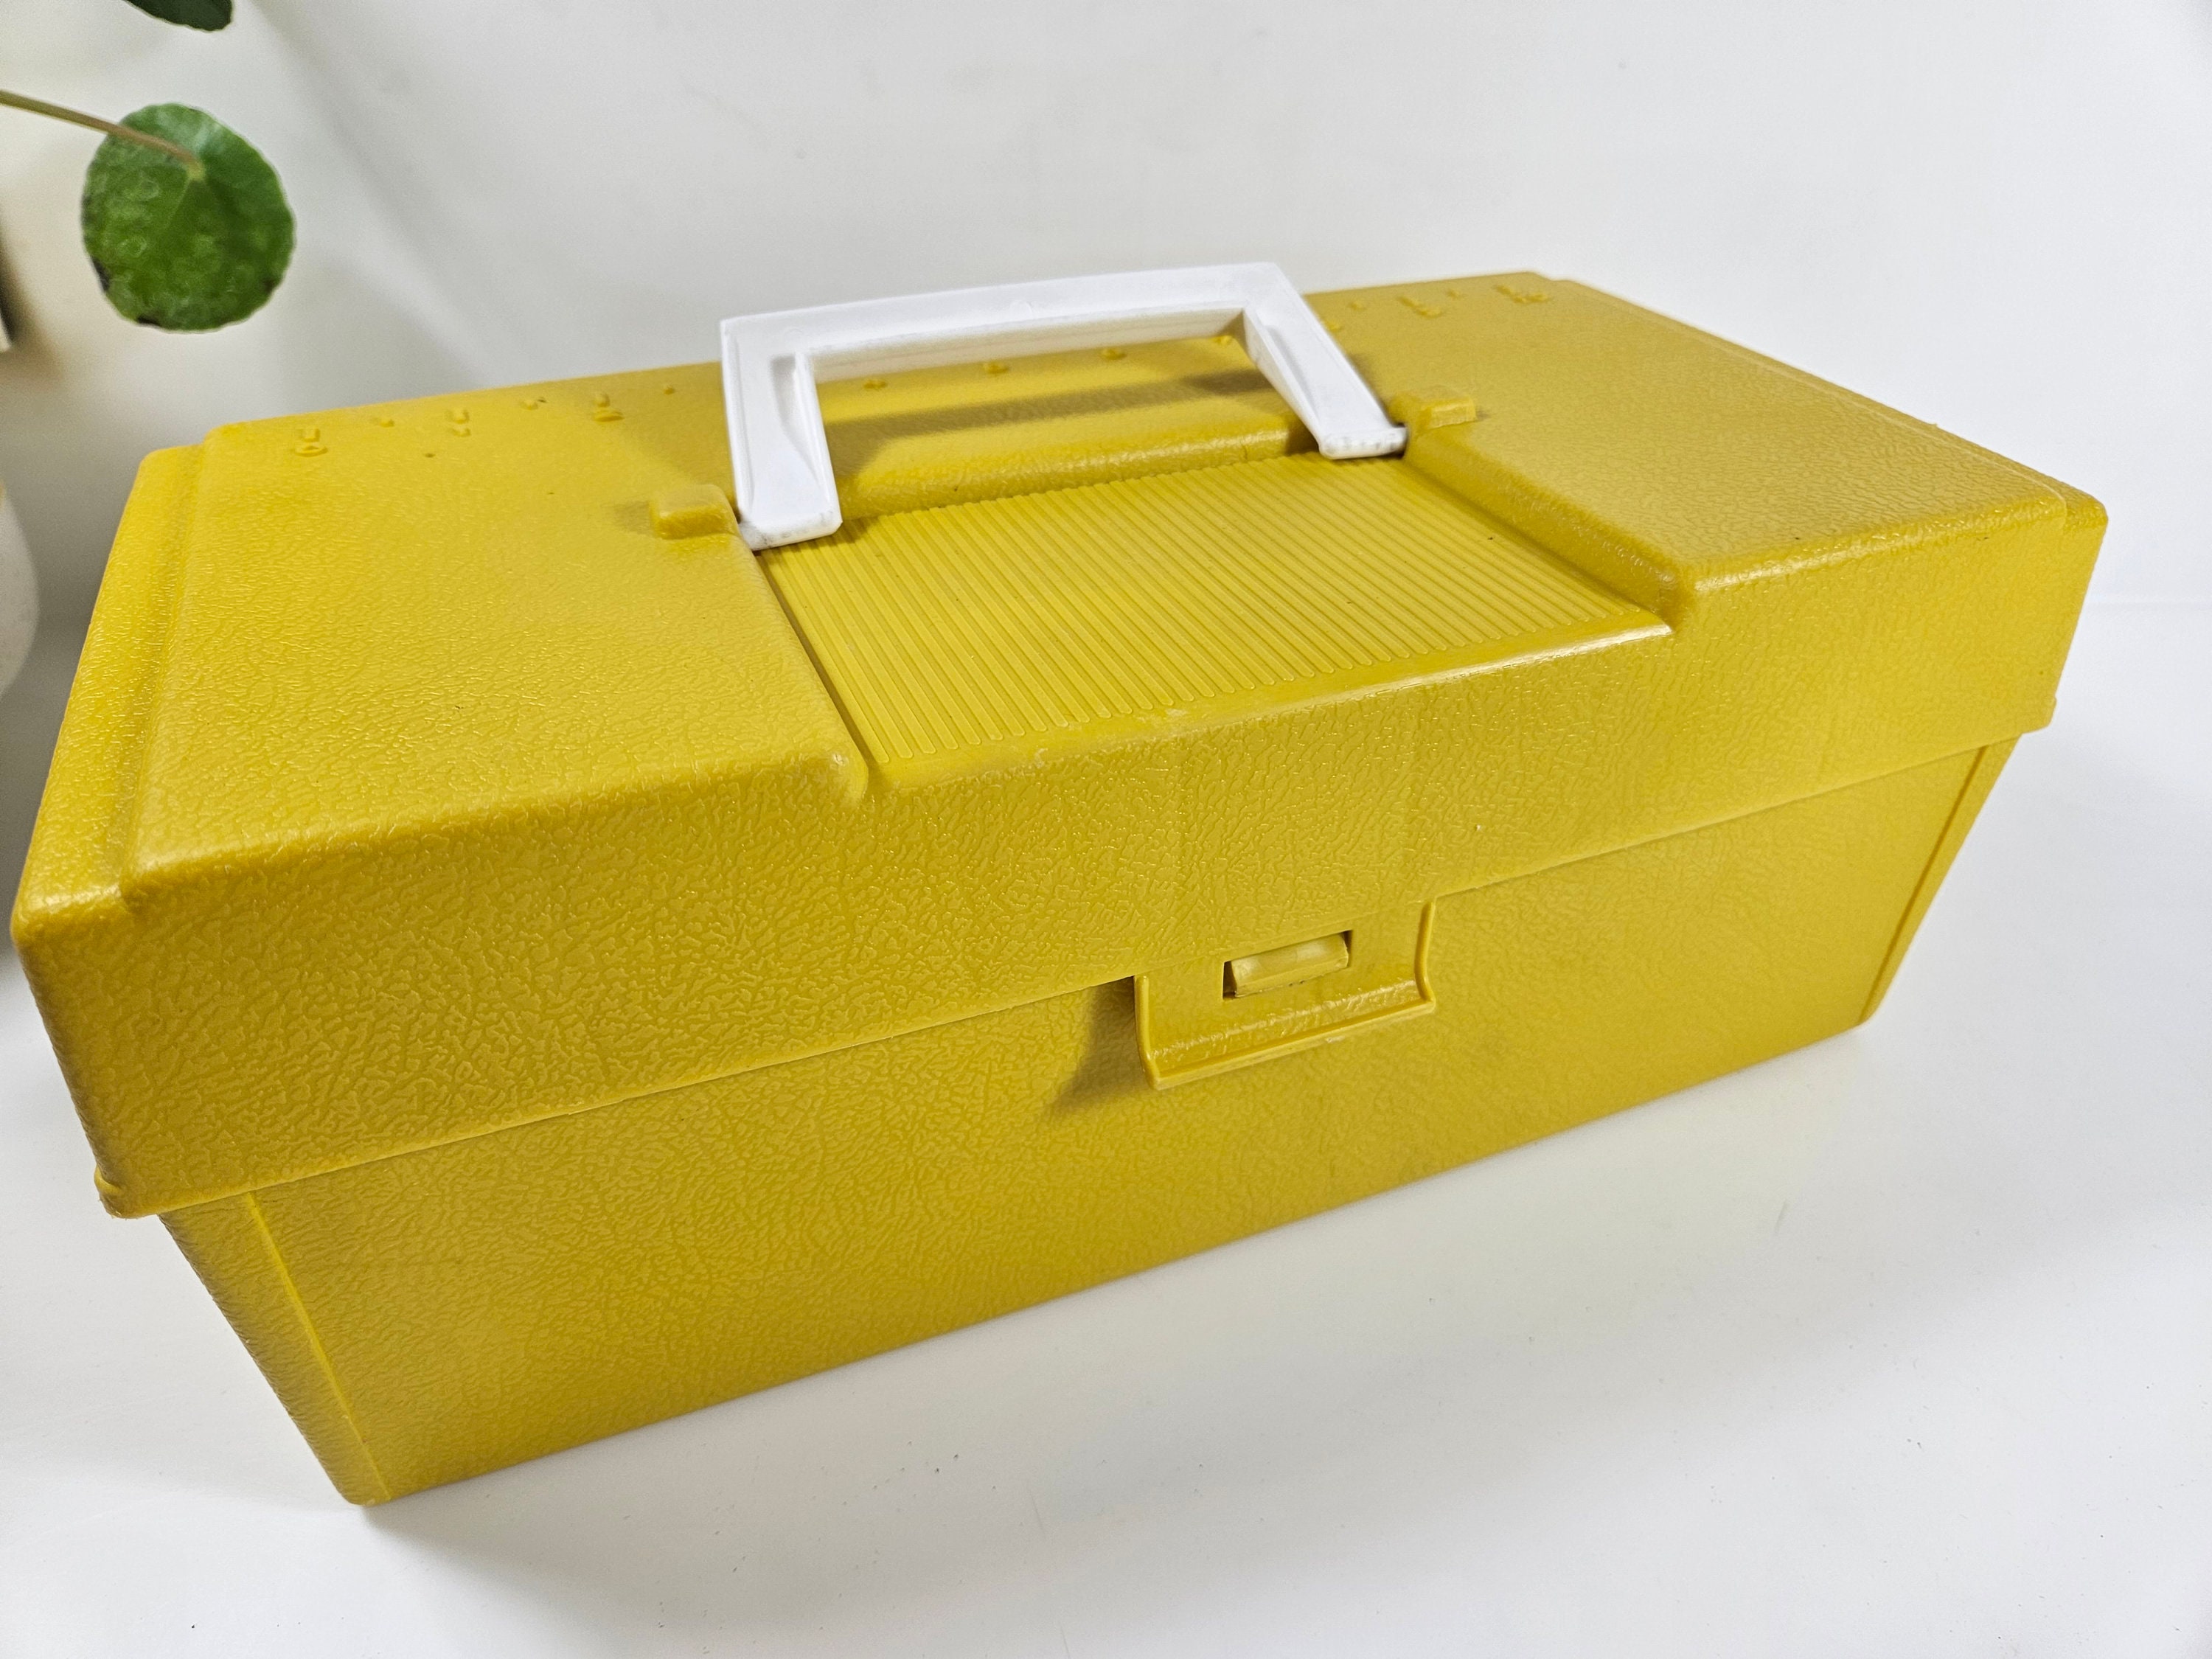 Vintage Plano Tackle Logic 3306 Fishing Backpack + Tackle Box NWT Brand New